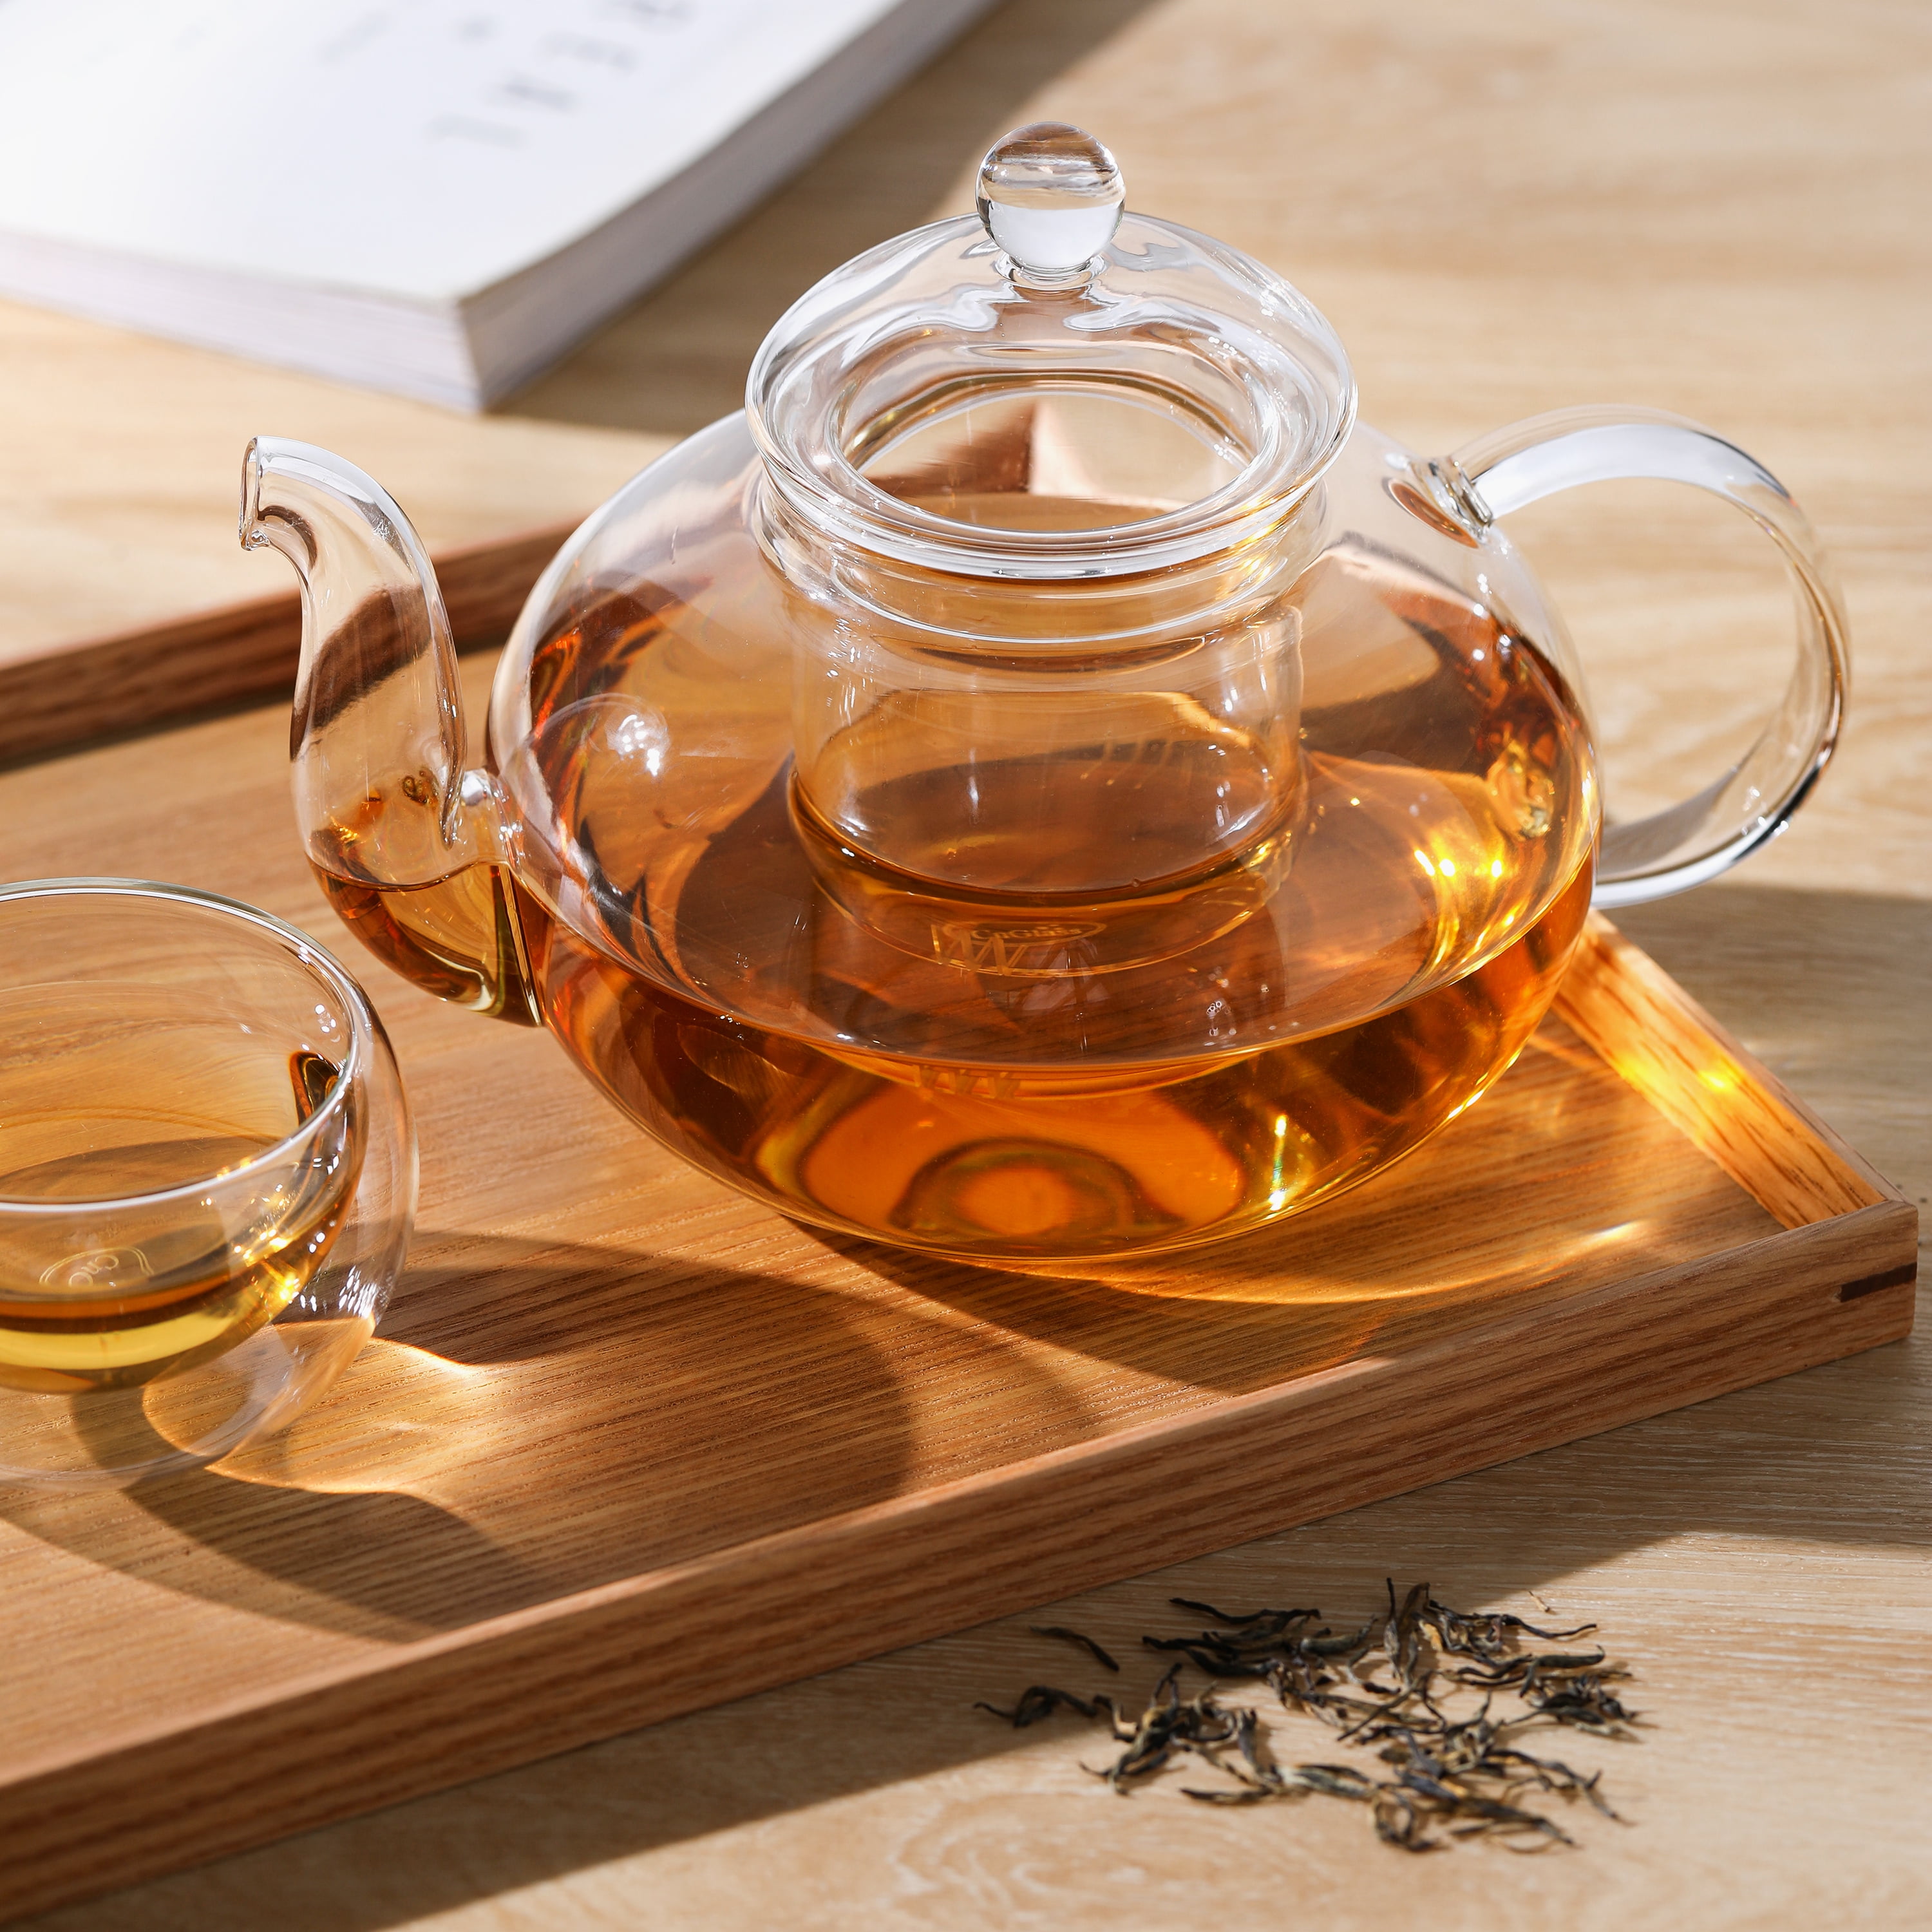 Grosche Monaco Loose Leaf Glass Teapot, Clear, 42 oz